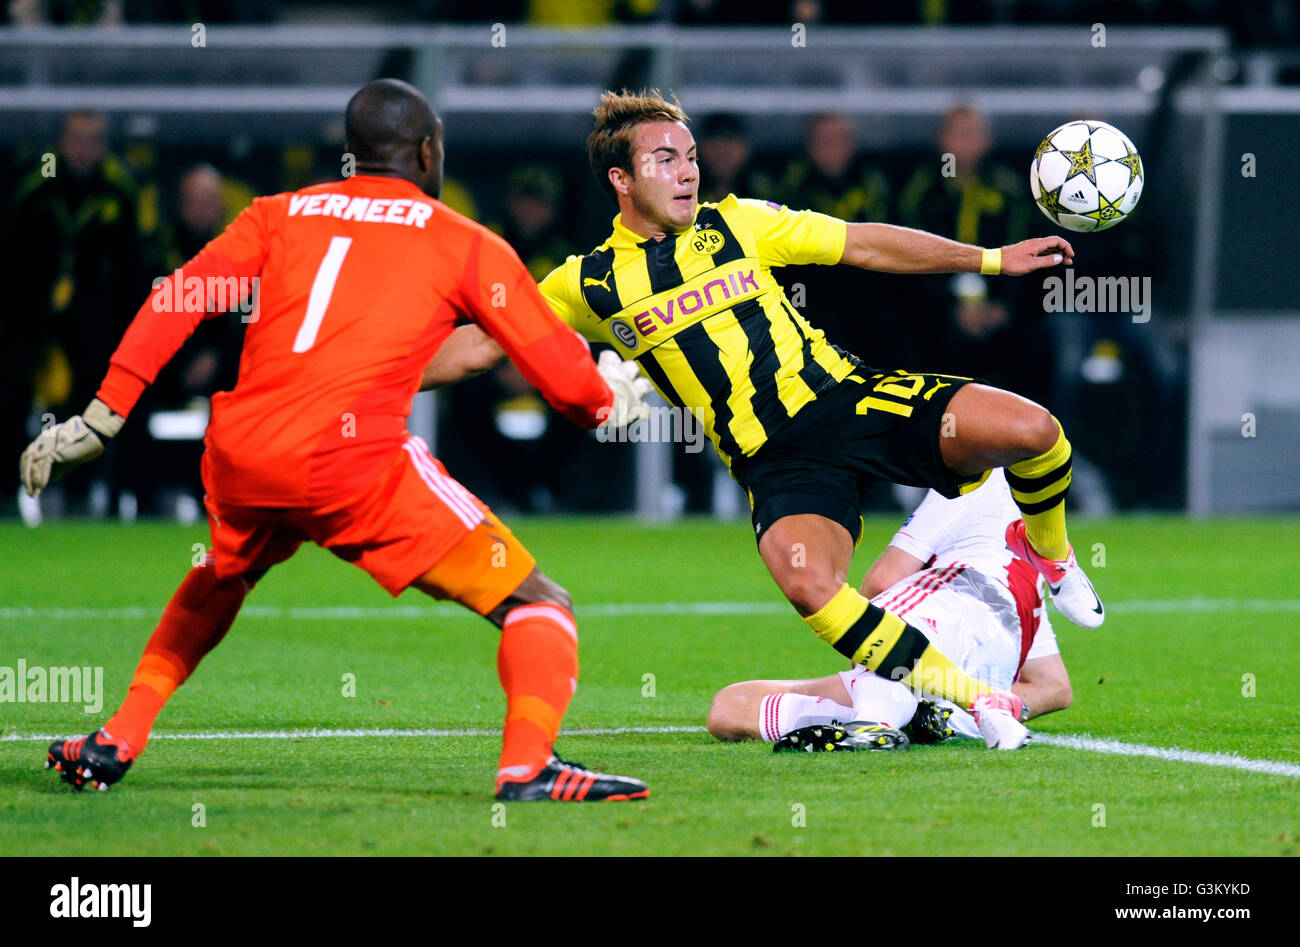 Borussia dortmund ajax amsterdam hi-res stock photography and images - Alamy